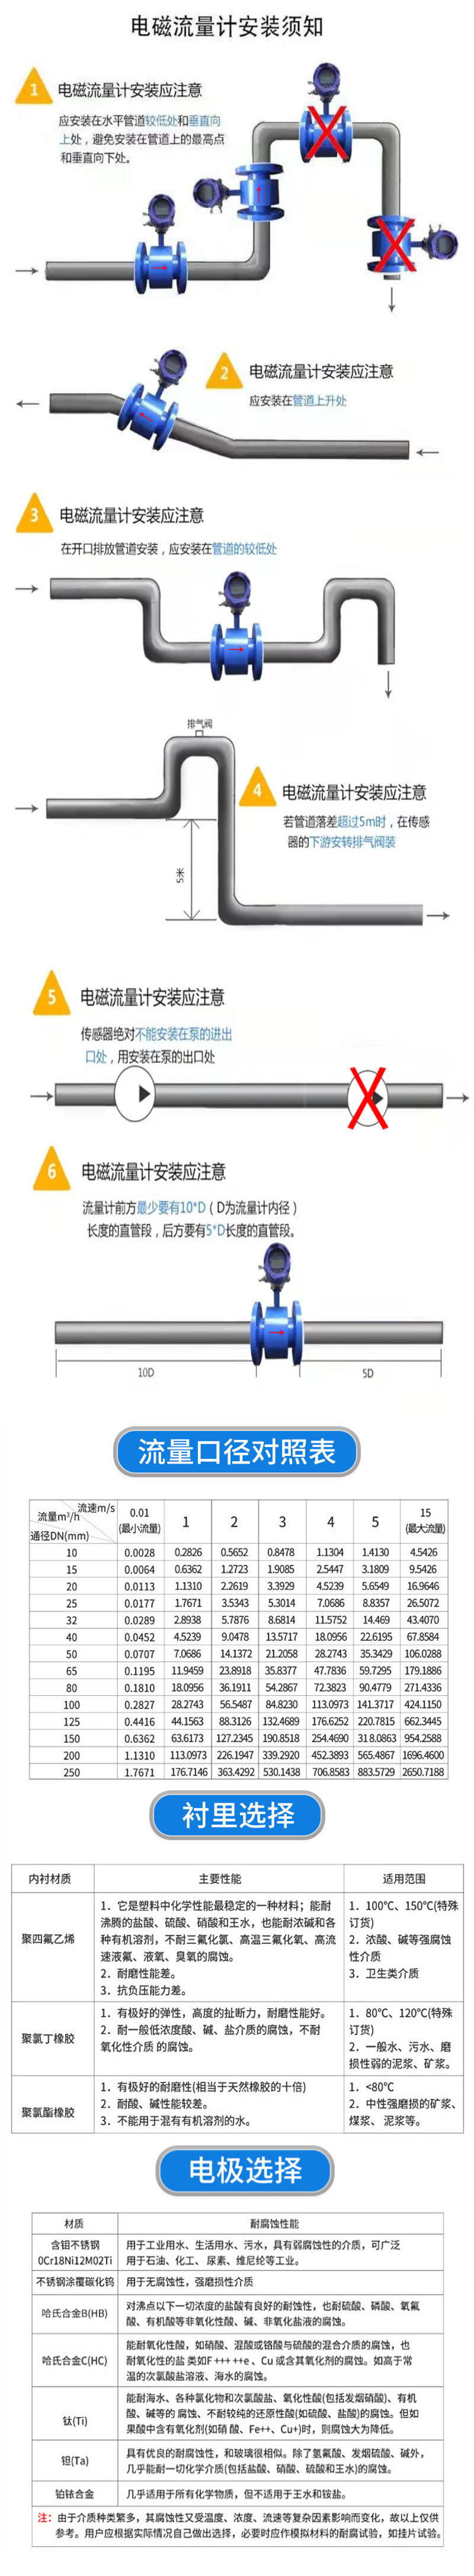 Tap water fire flow meter, pipeline plug-in electromagnetic flow meter, split rubber electronic instrument